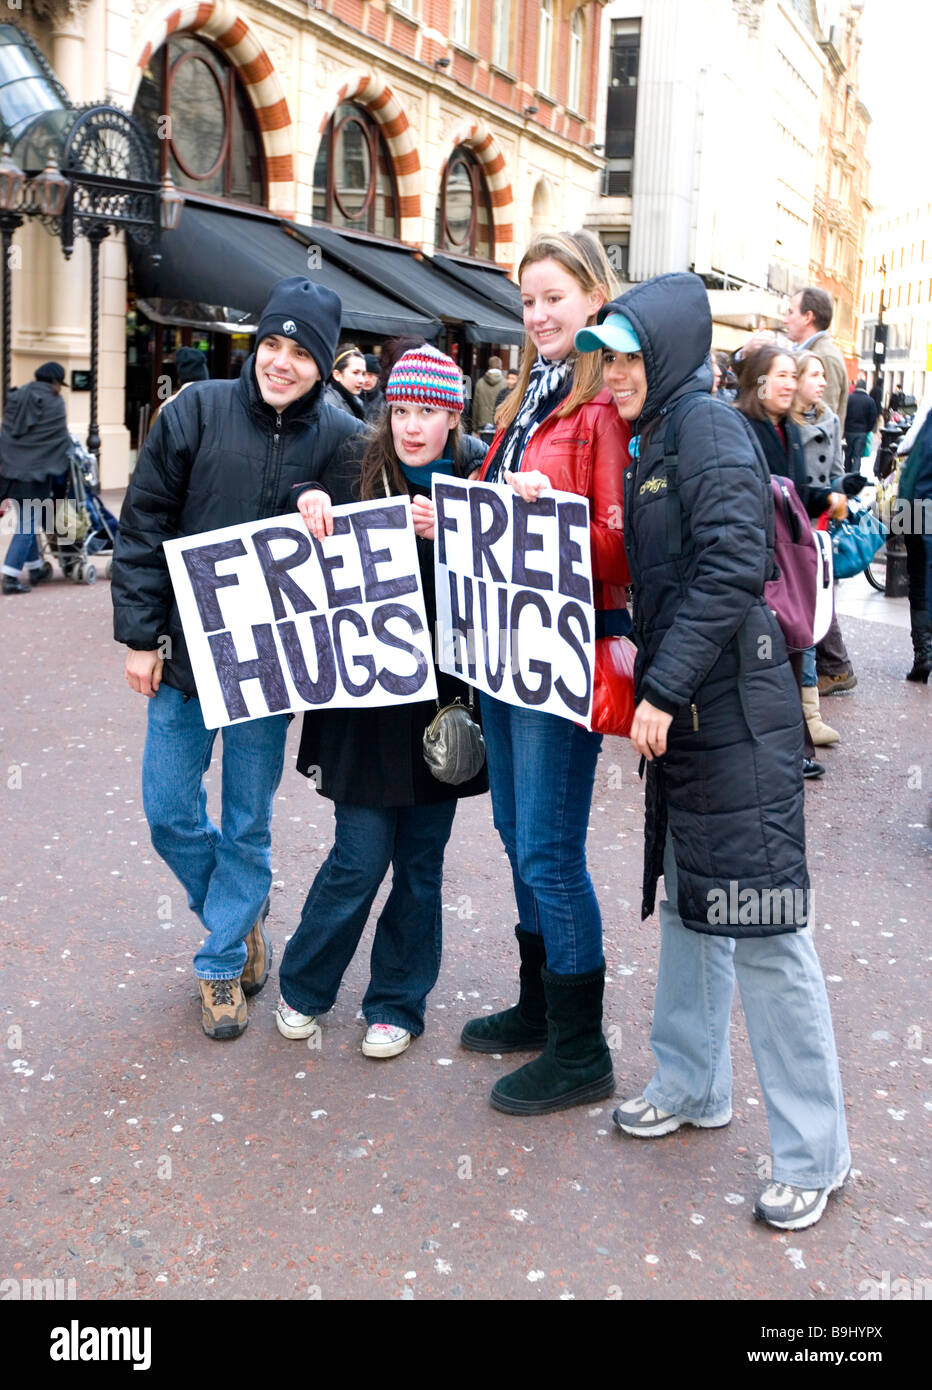 Free hugs - Leicester Square, London. England, Europe Stock Photo